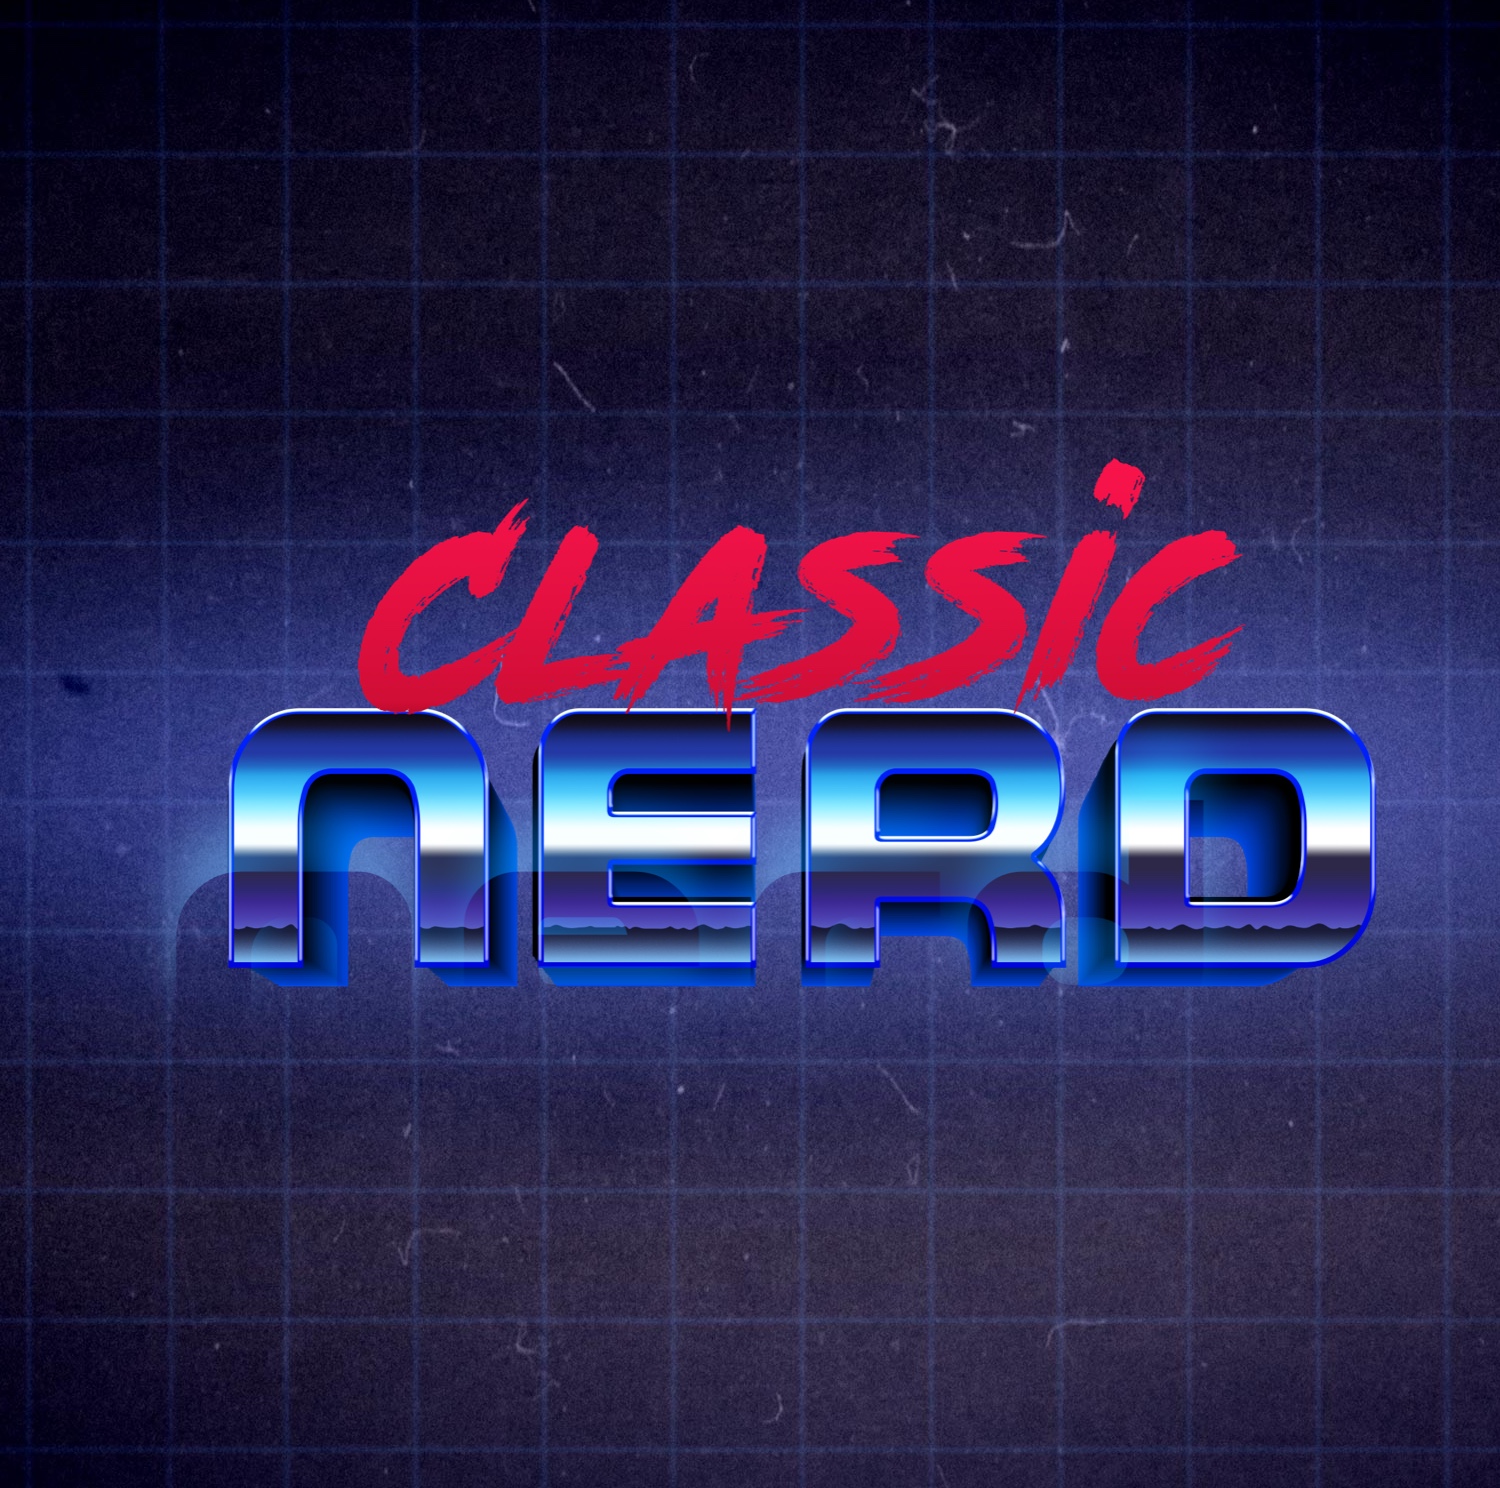 Classic Nerd logo